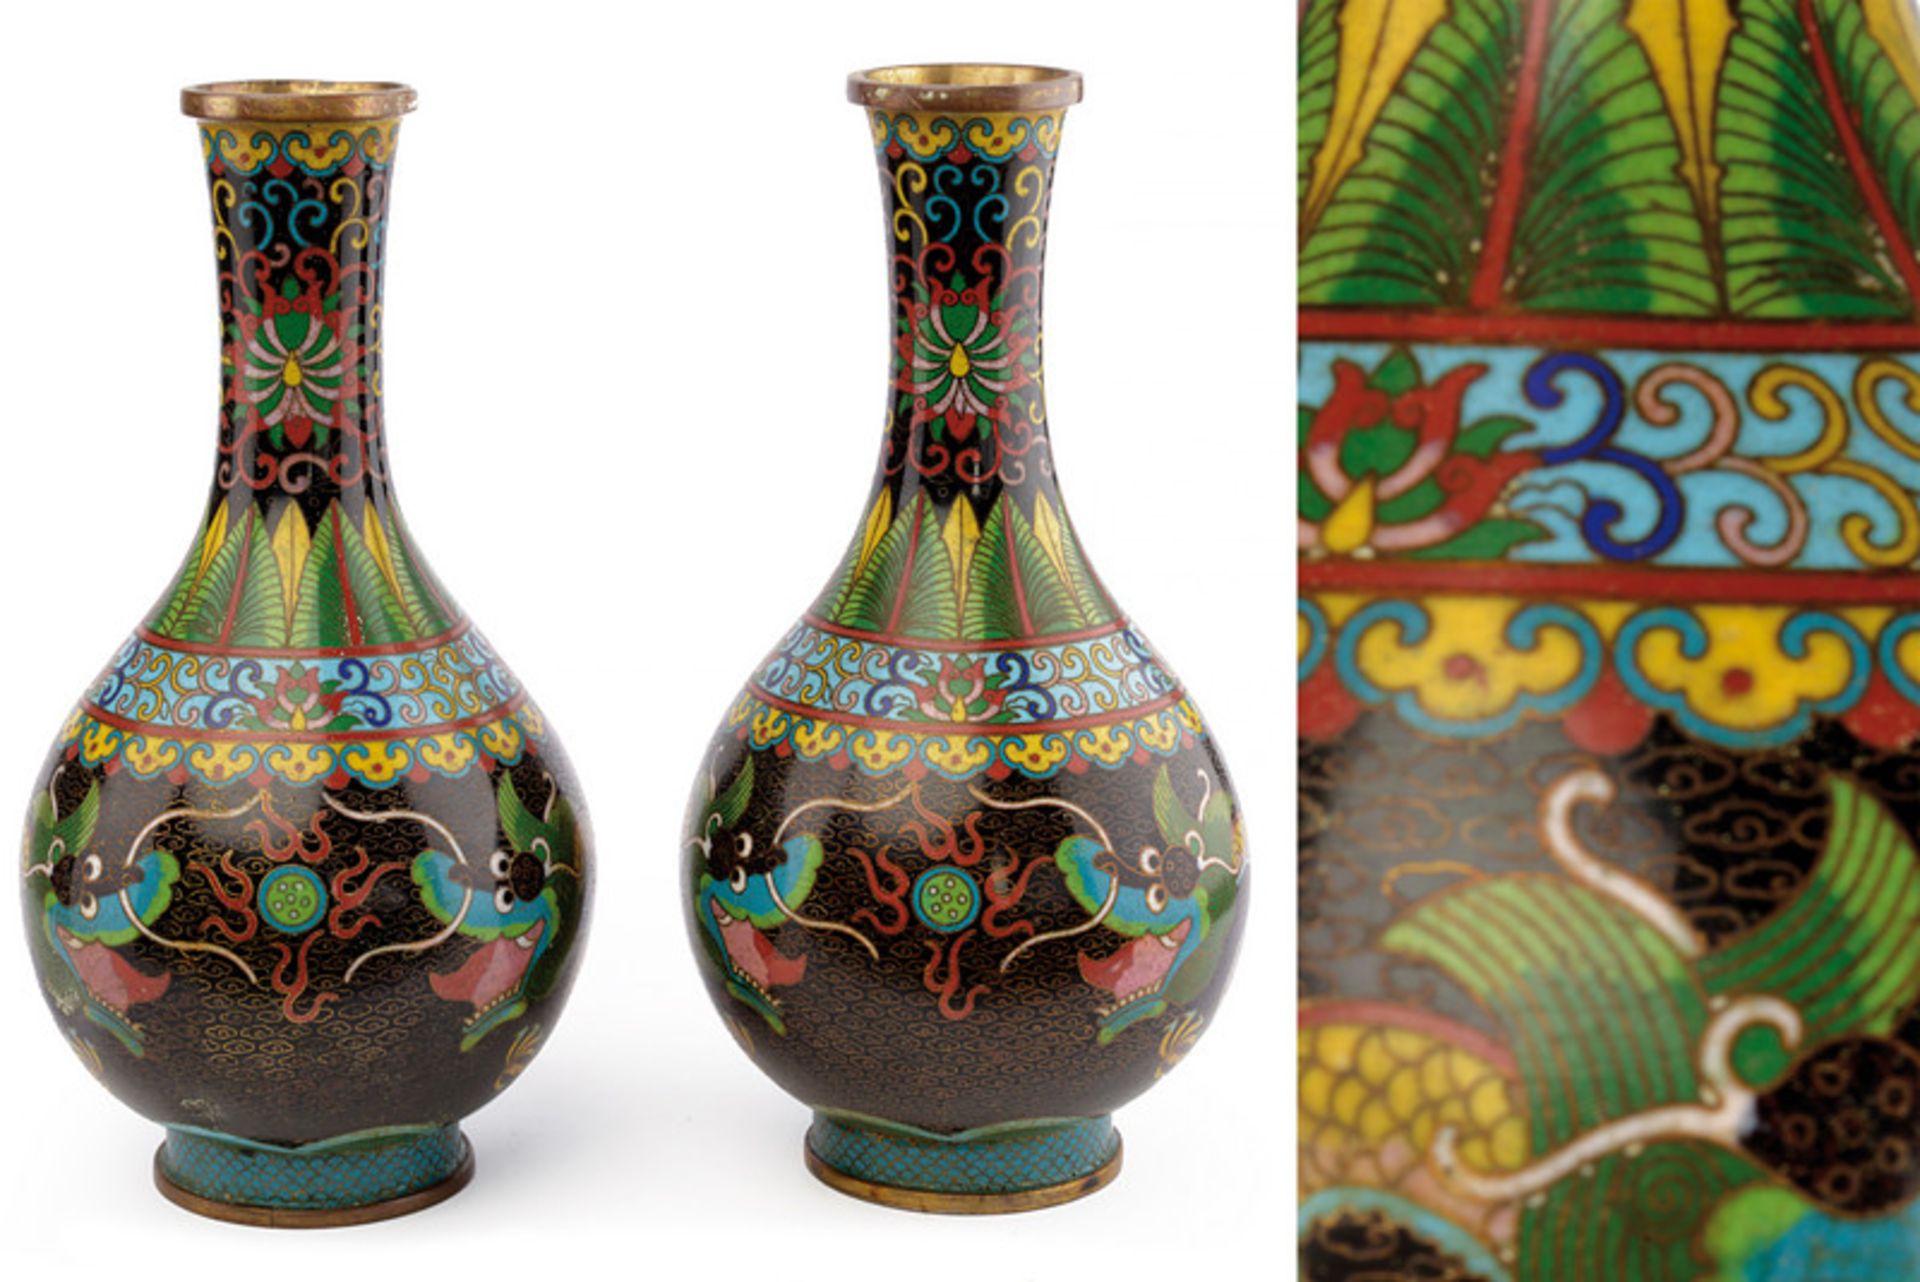 A pair of cloisonnÃ© vases, dating: circa 1900, provenance: China, dating: circa 1900, provenance: